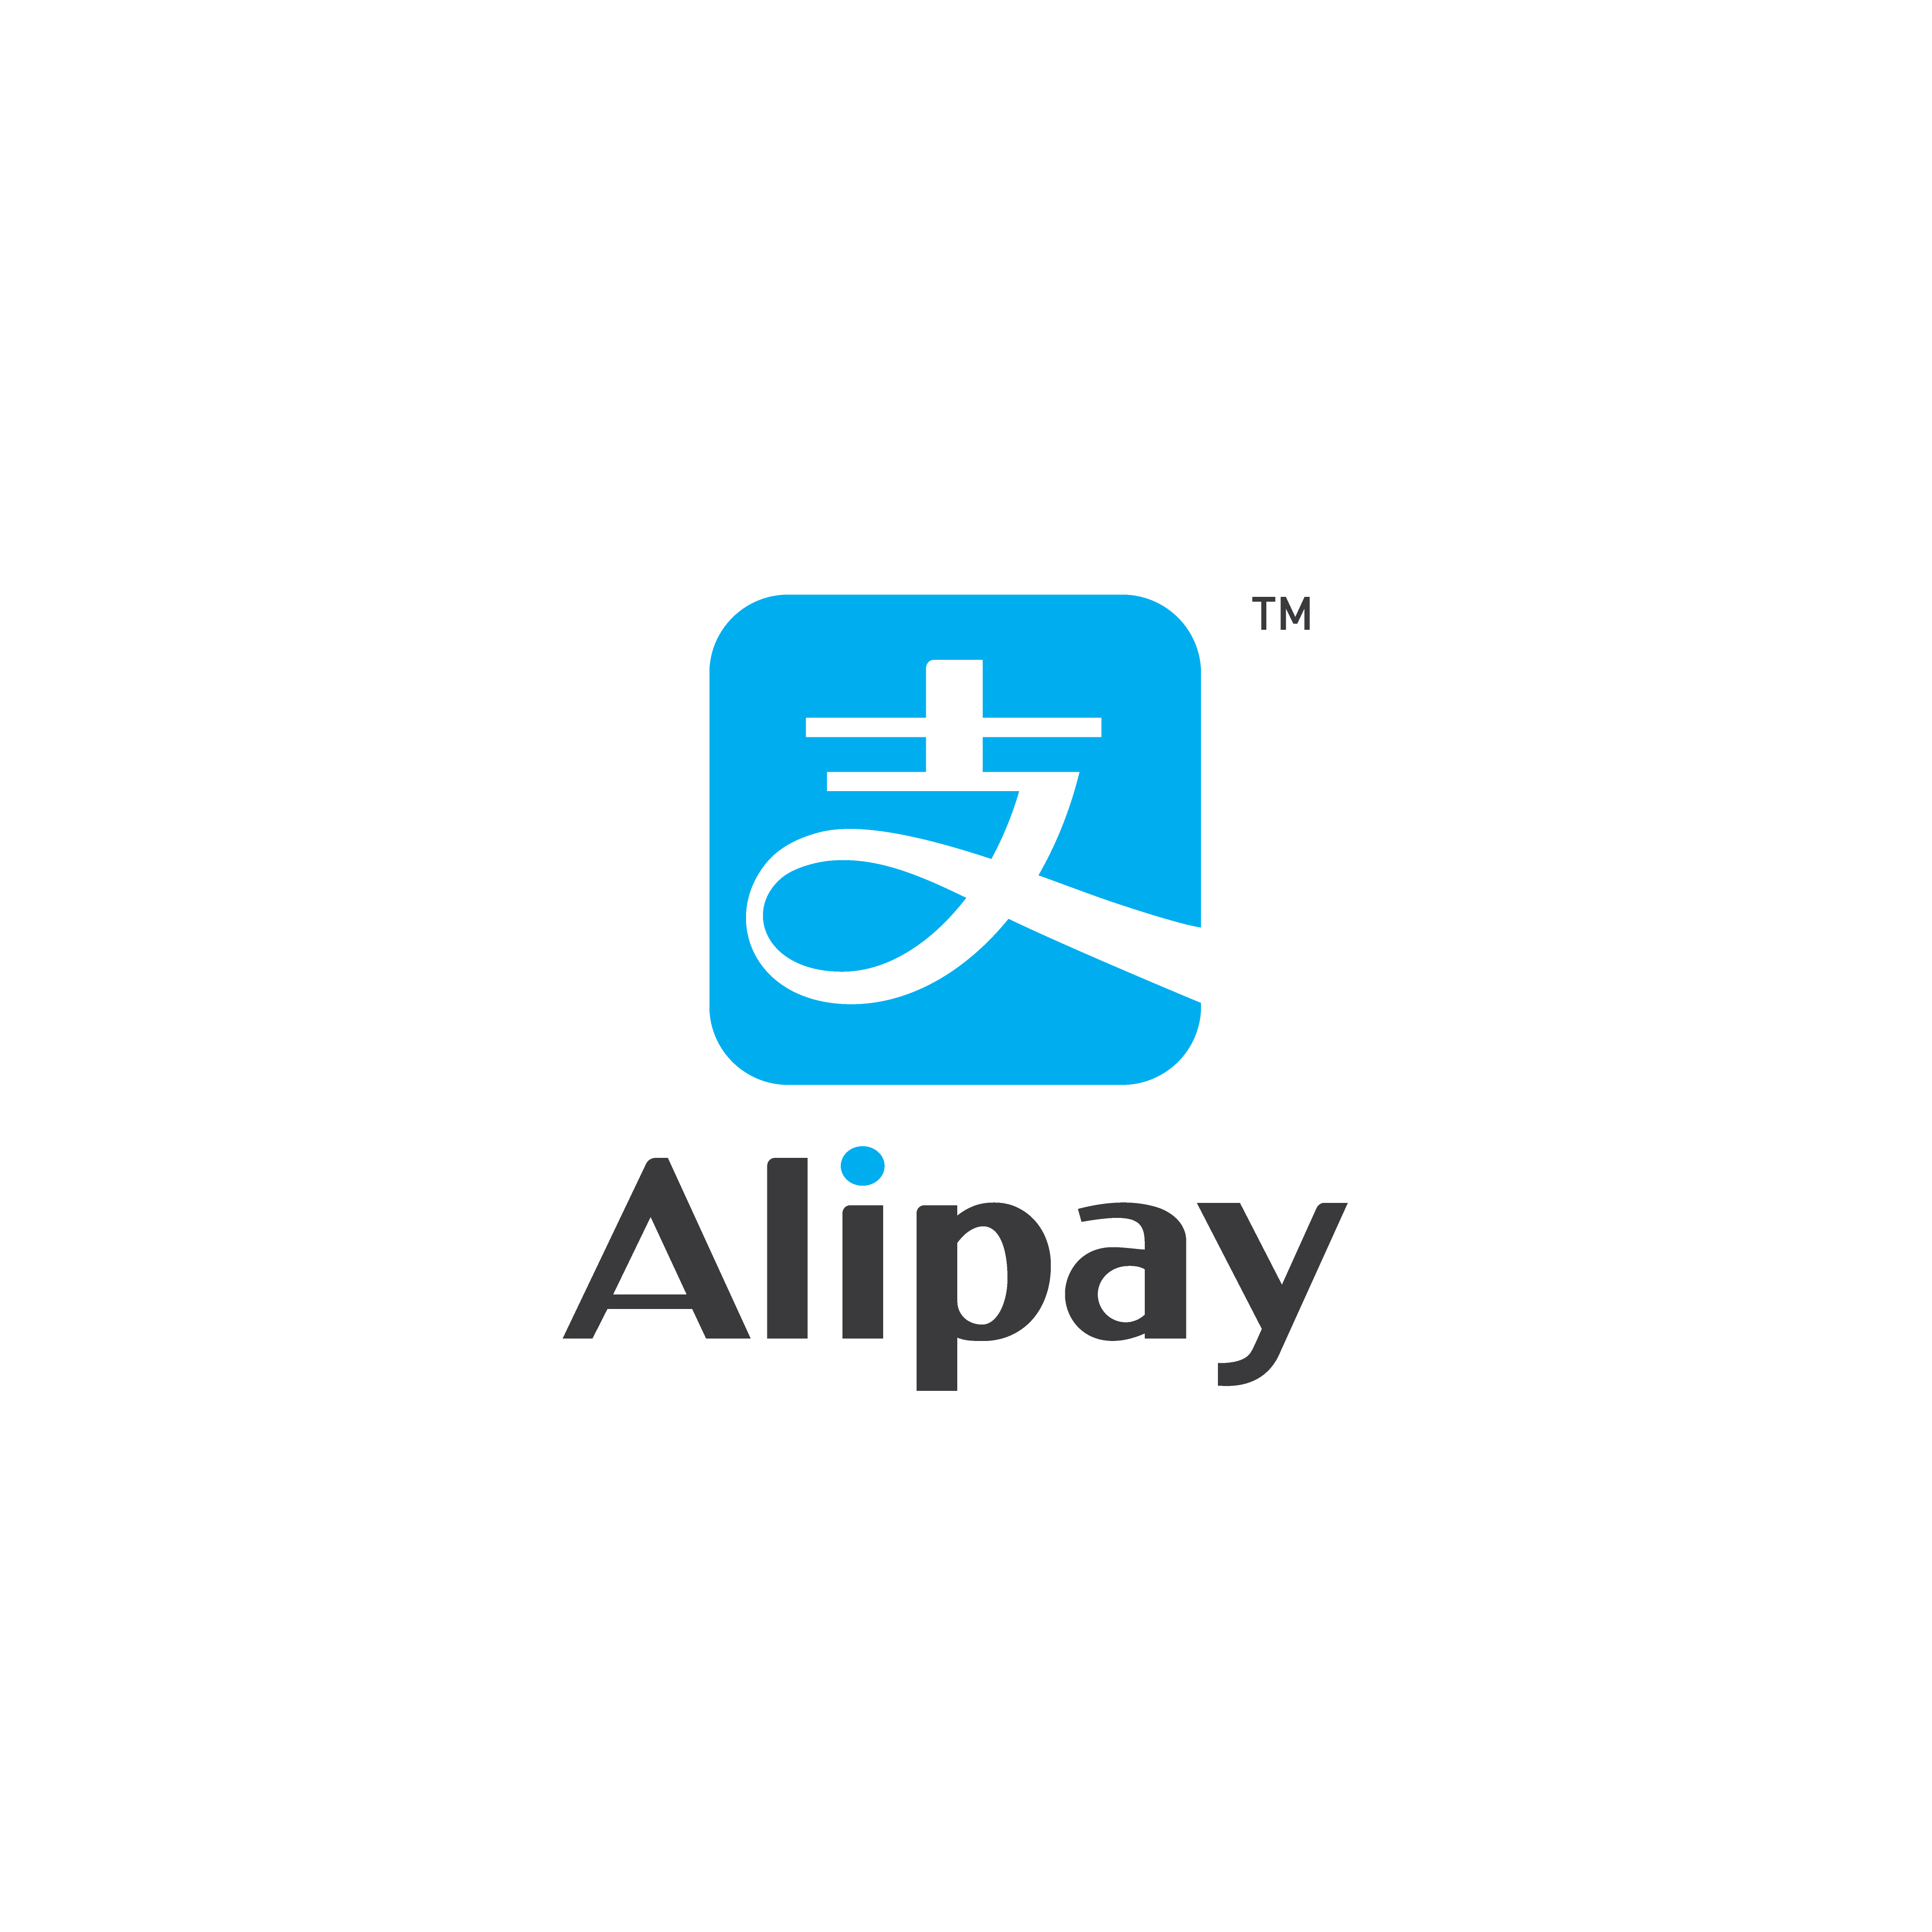 Alipay Logo - Alipay - Tech in Asia